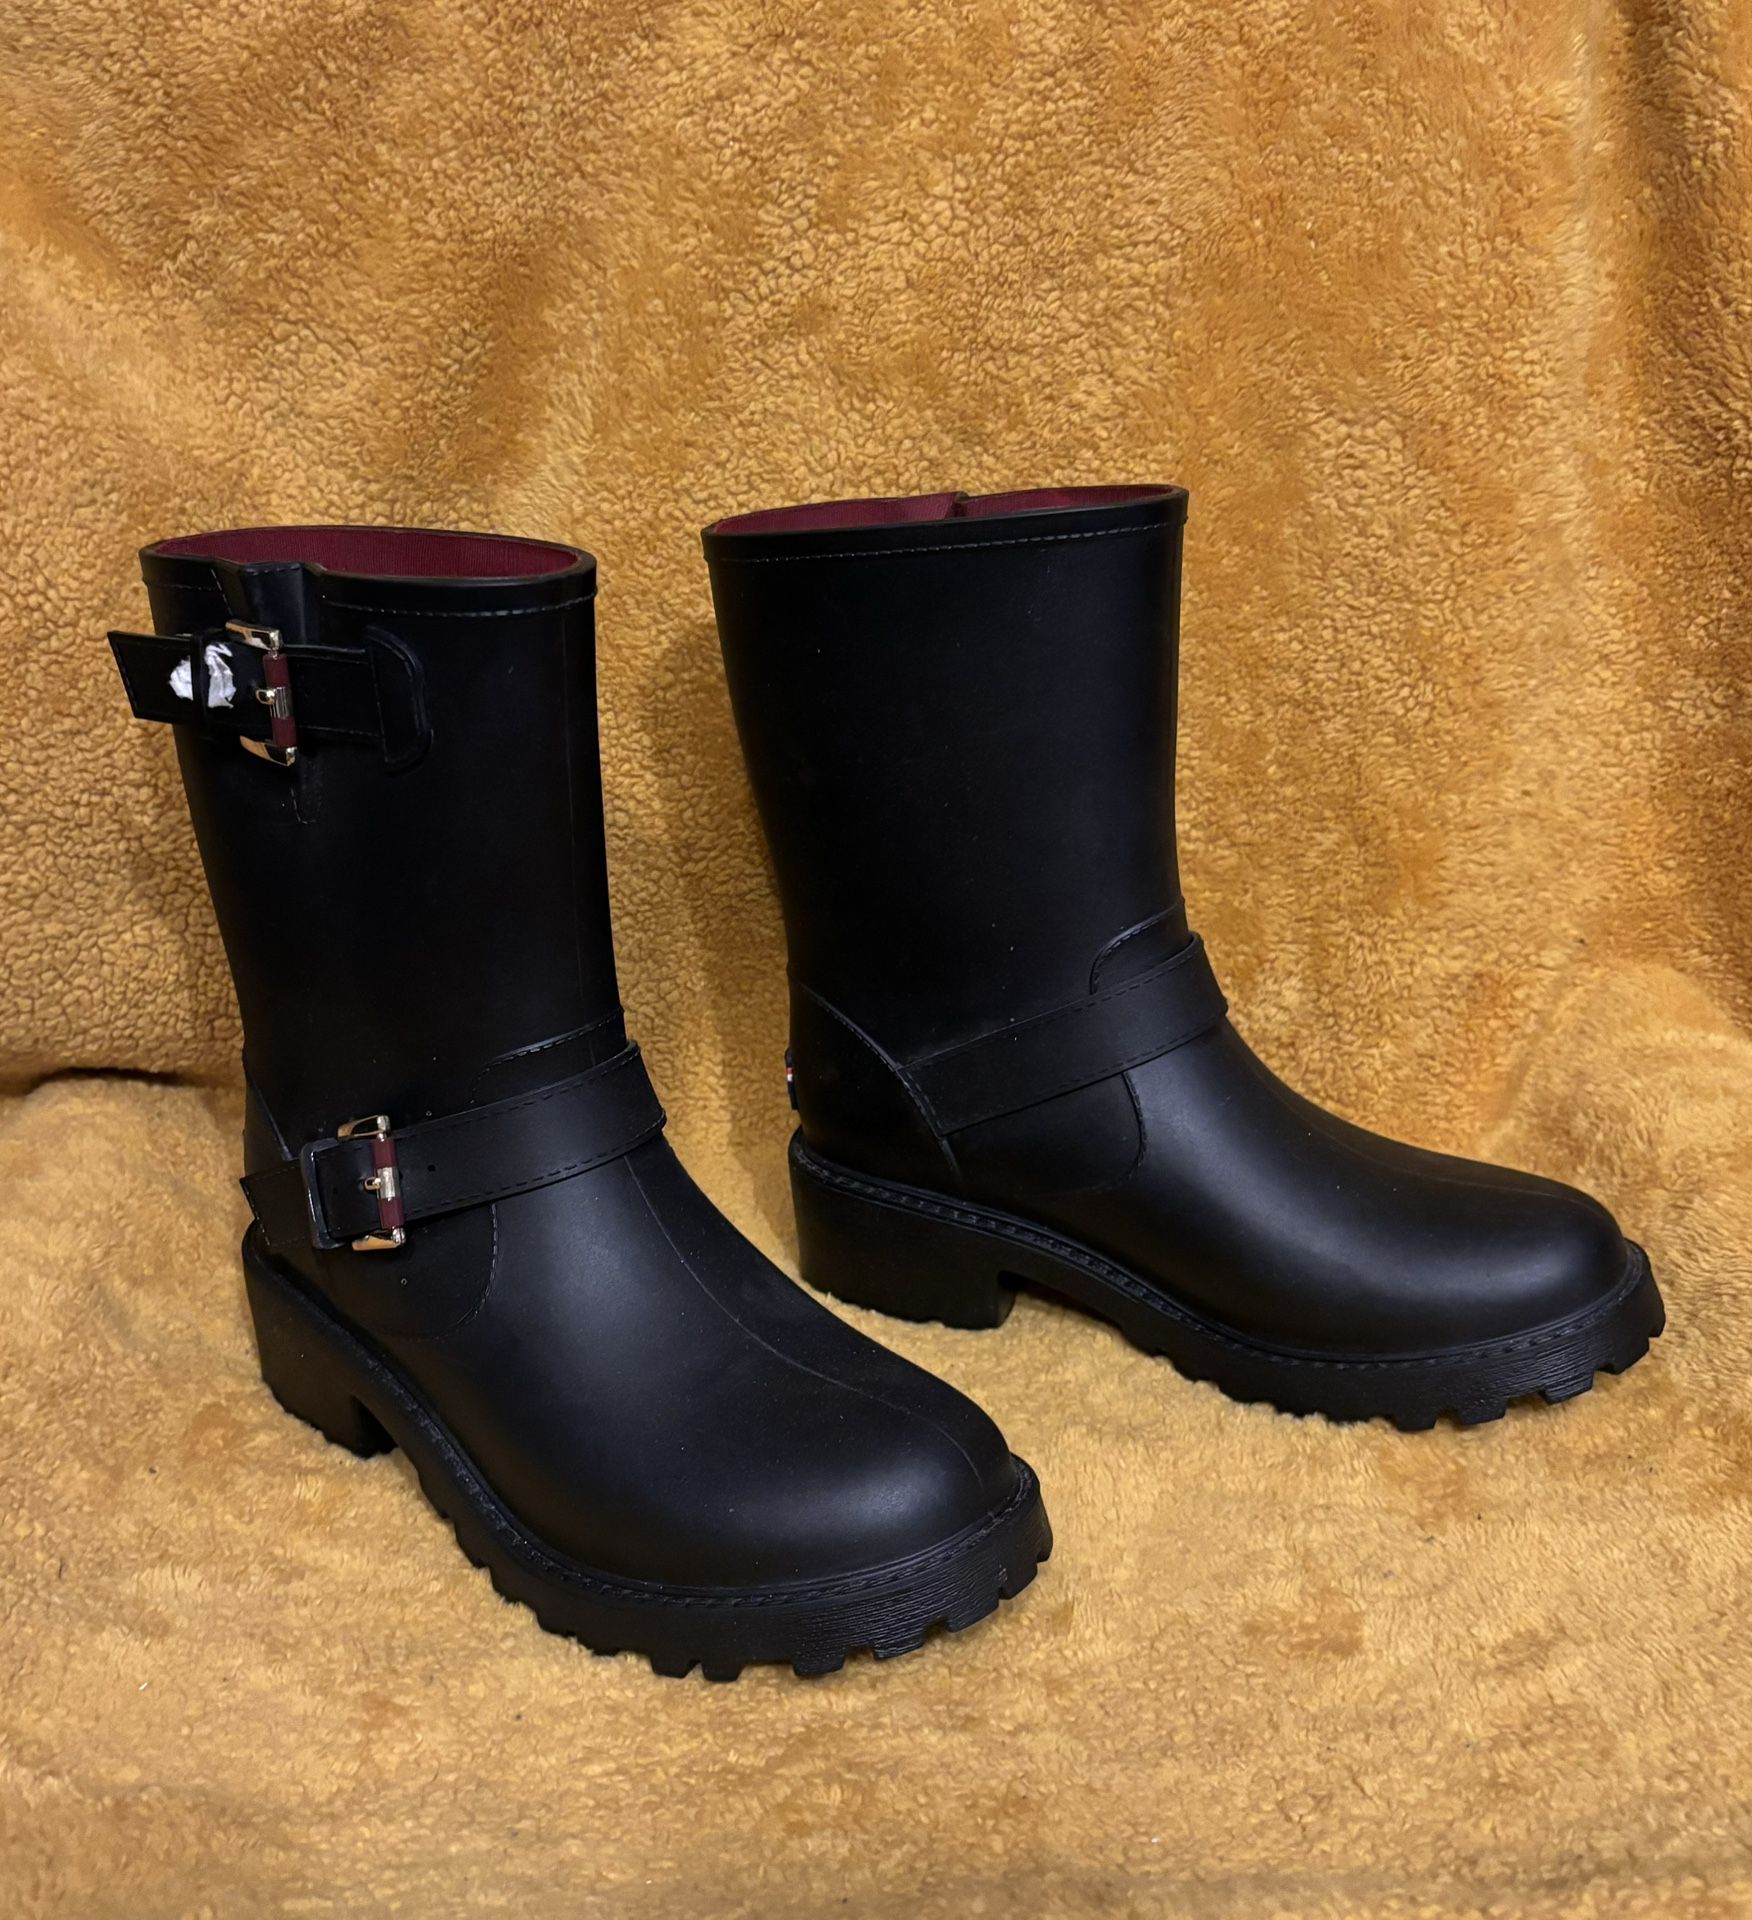 Women's Tommy Hilfiger Black Rubber Buckle Rain Boots